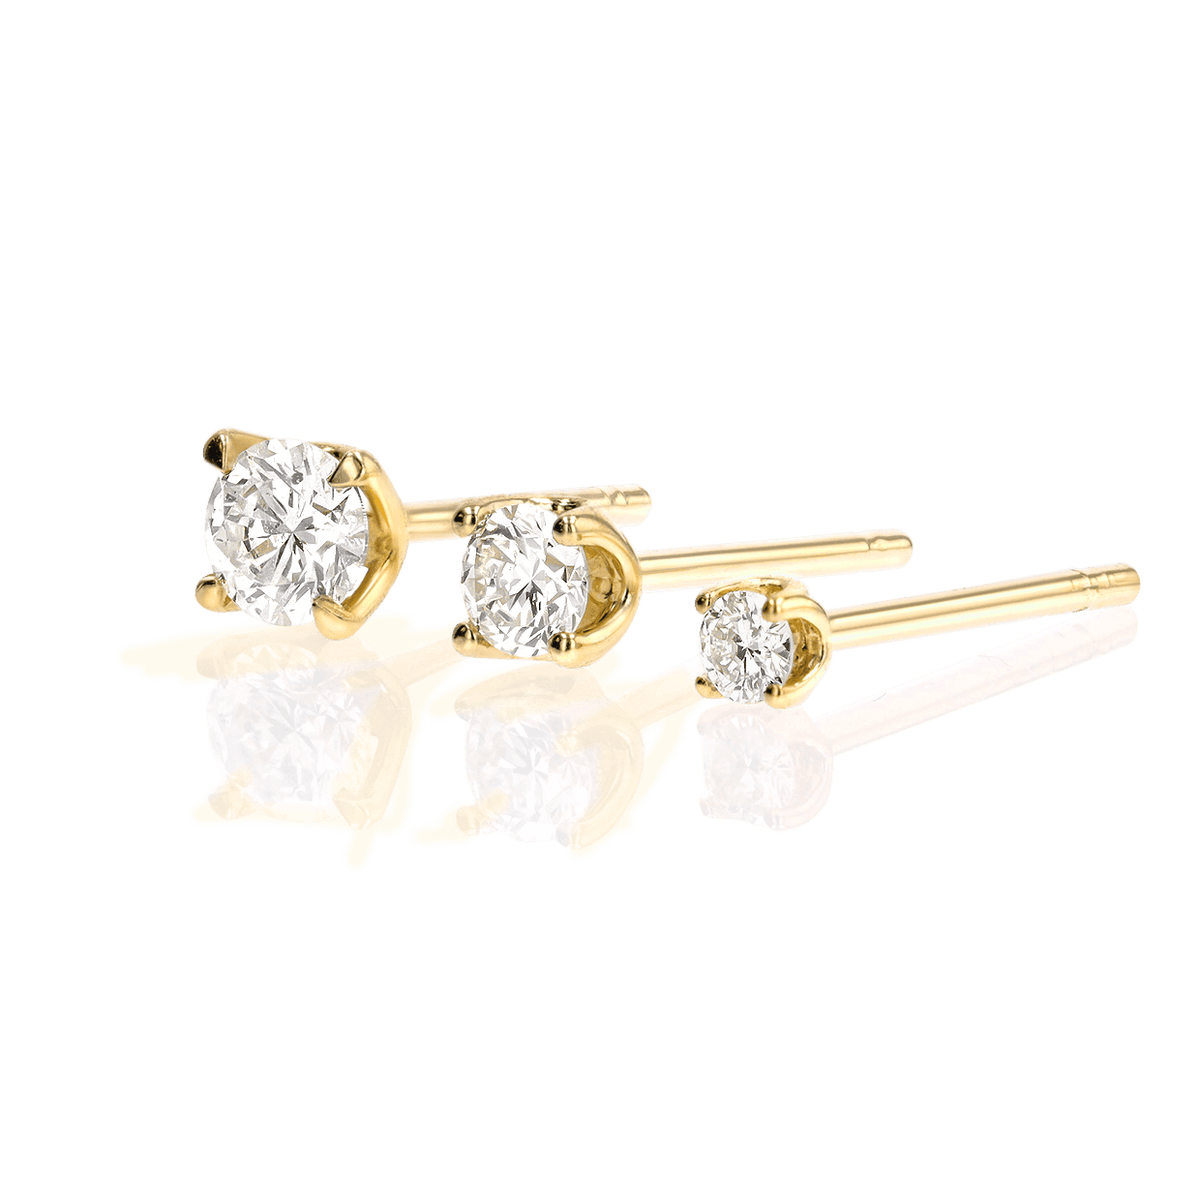 Tiny Diamond Studs 14K Yellow Gold / Pair by Baby Gold - Shop Custom Gold Jewelry